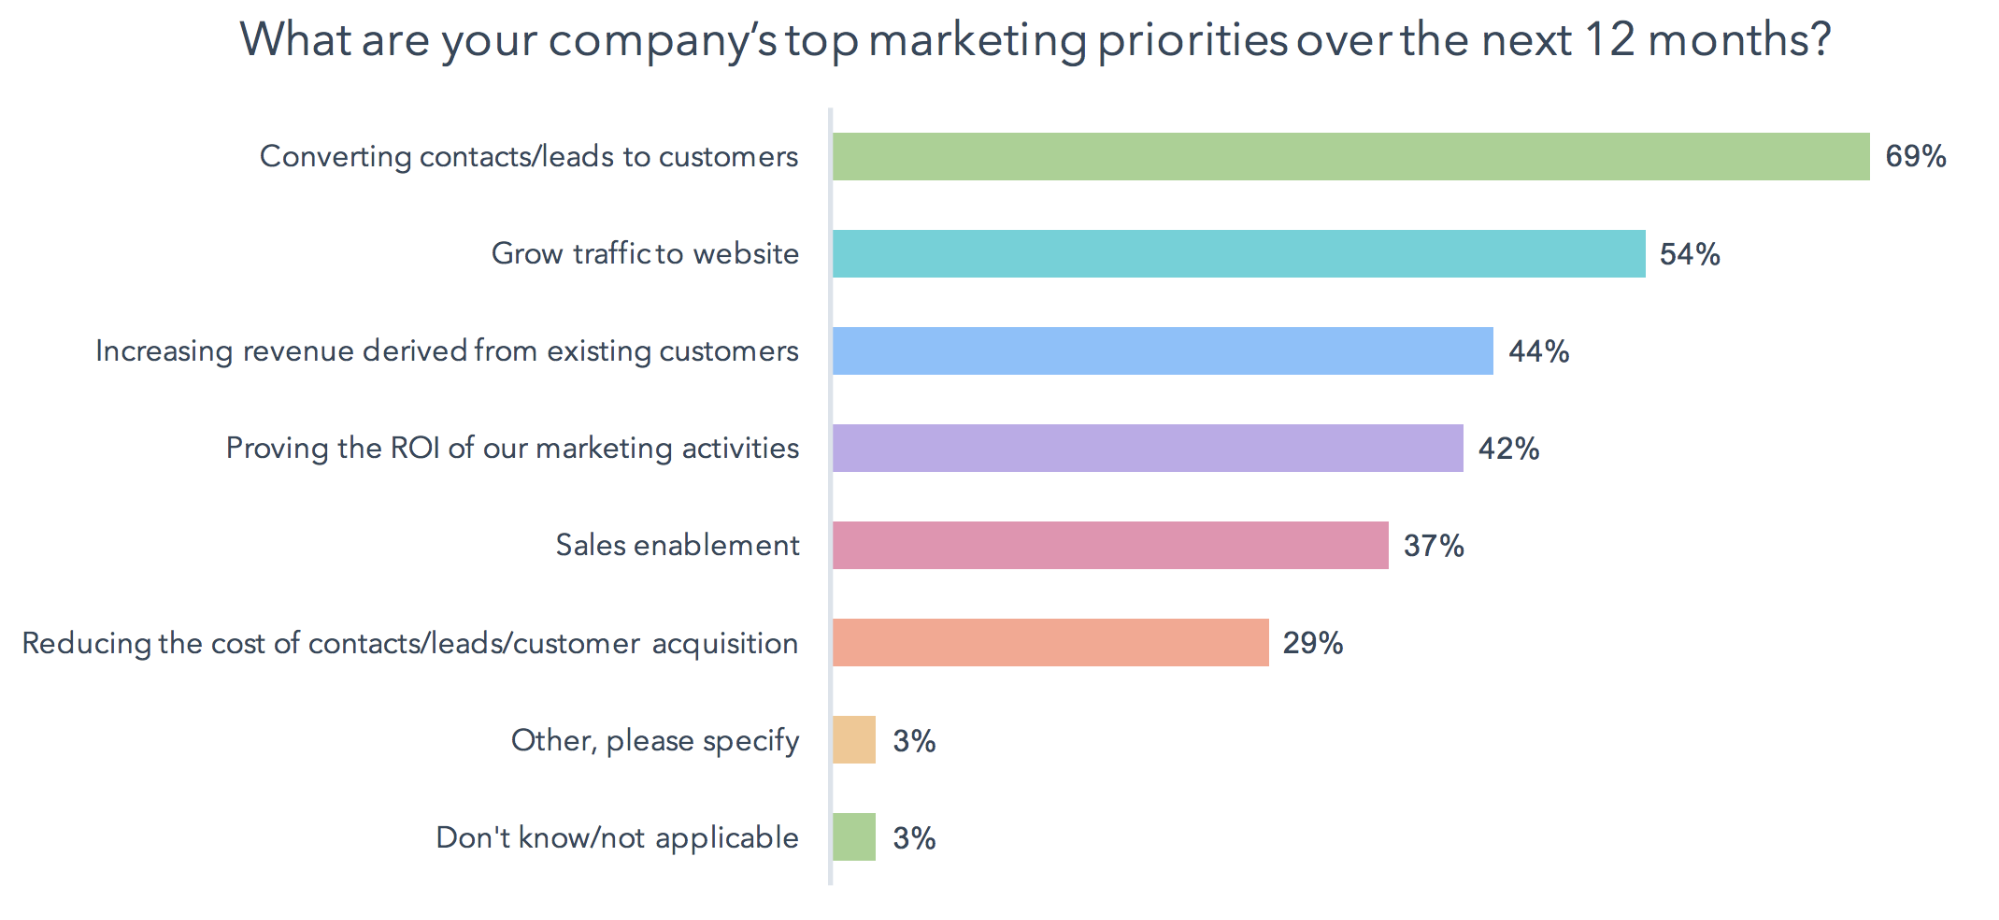 Company's top marketing priorities